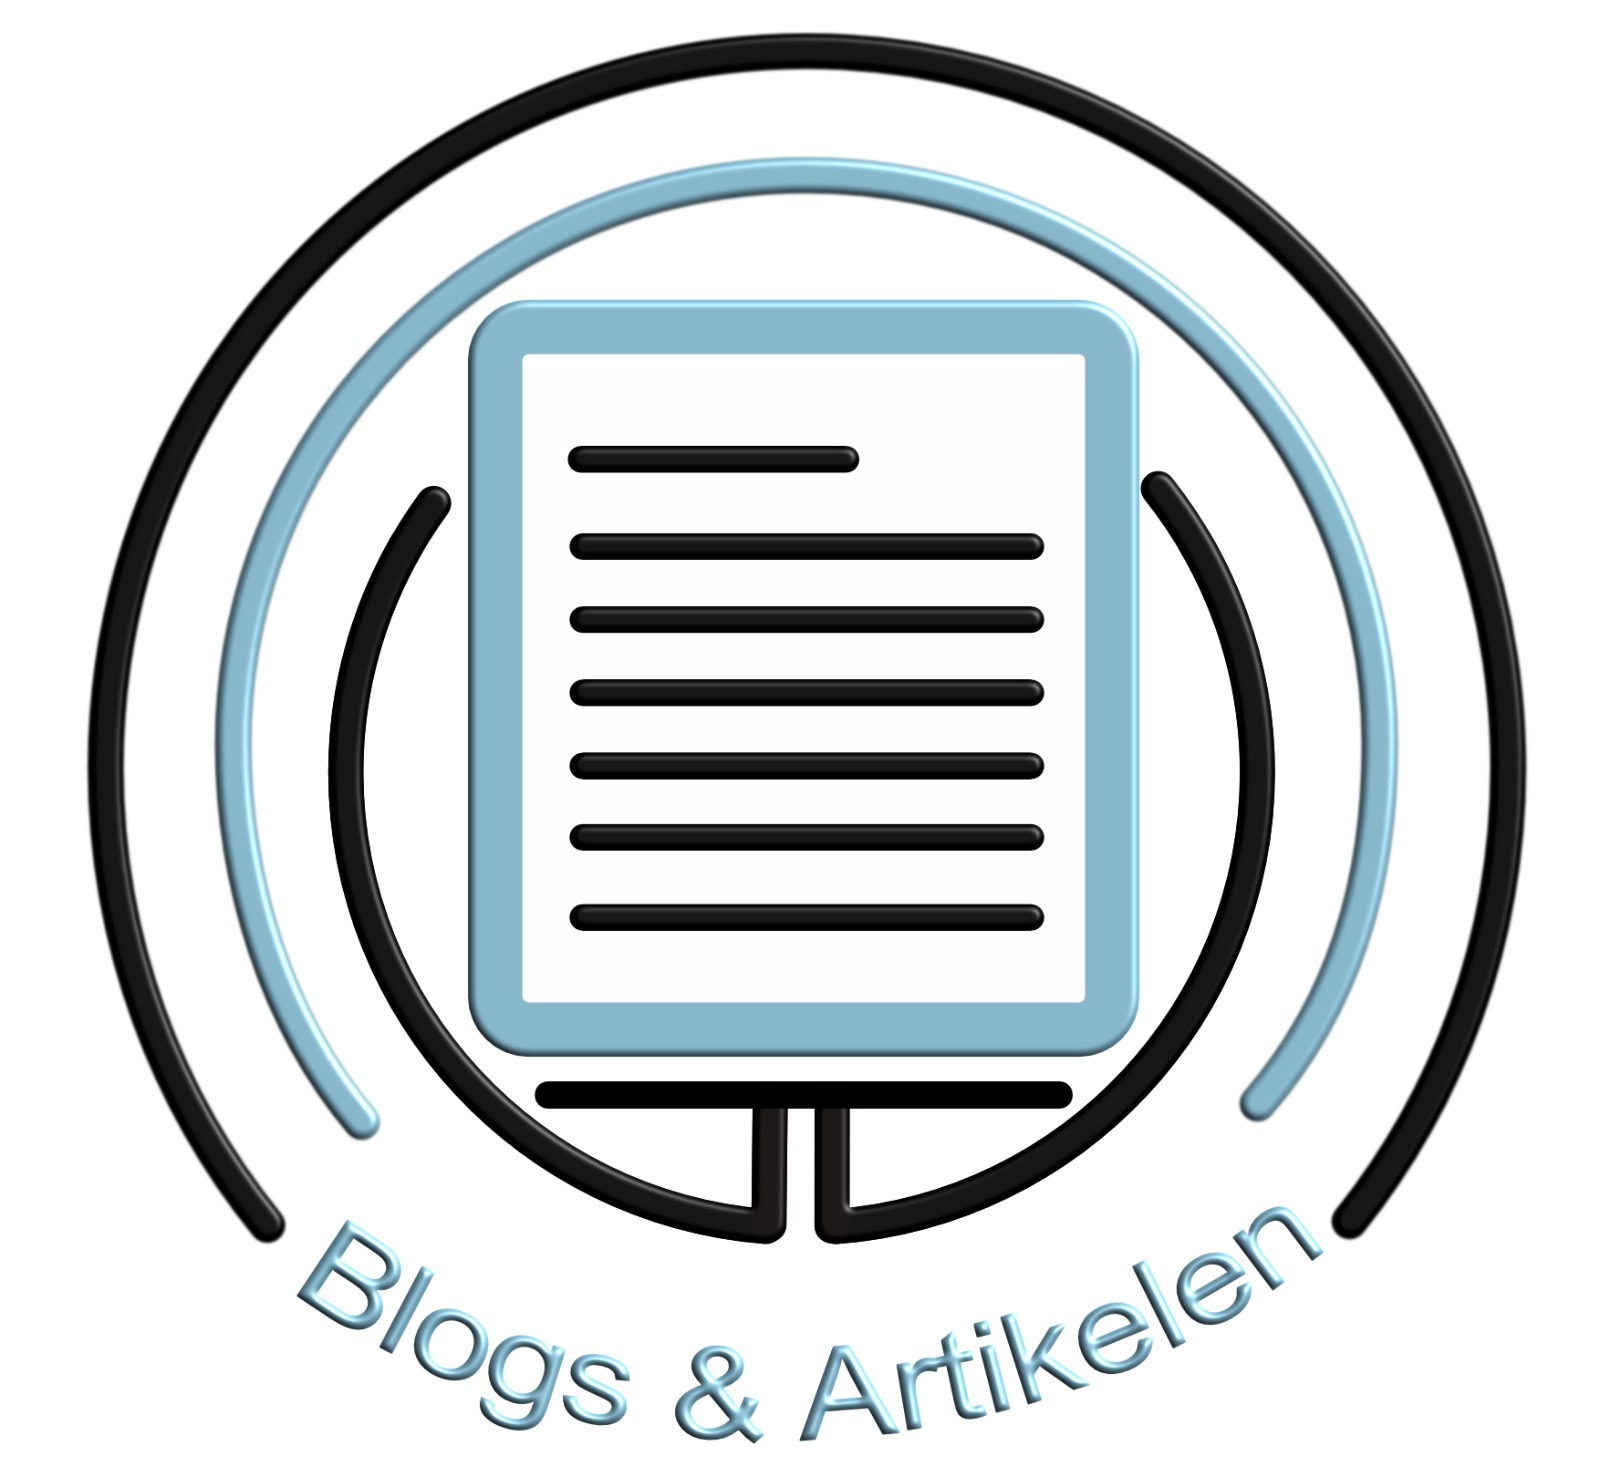 logo blogs en artikelen